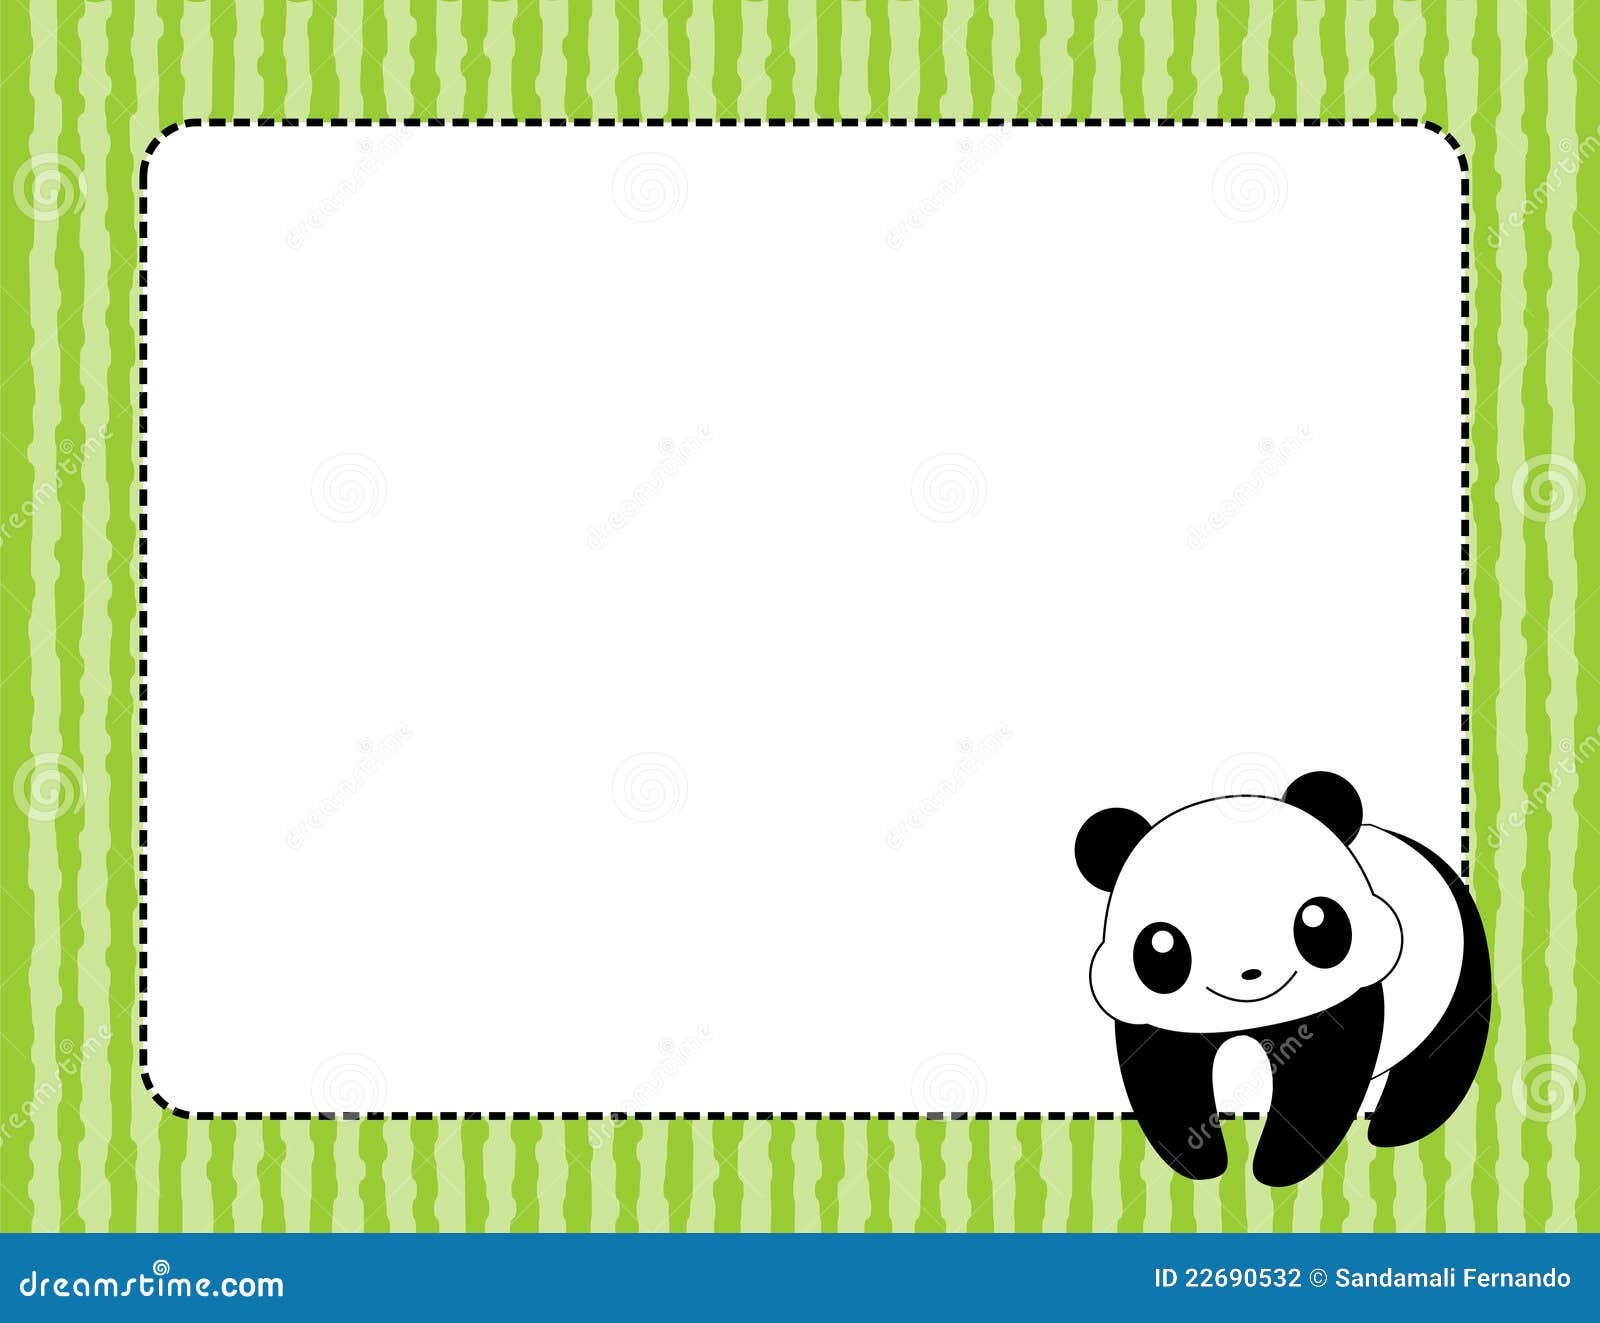 clipart panda frames - photo #8